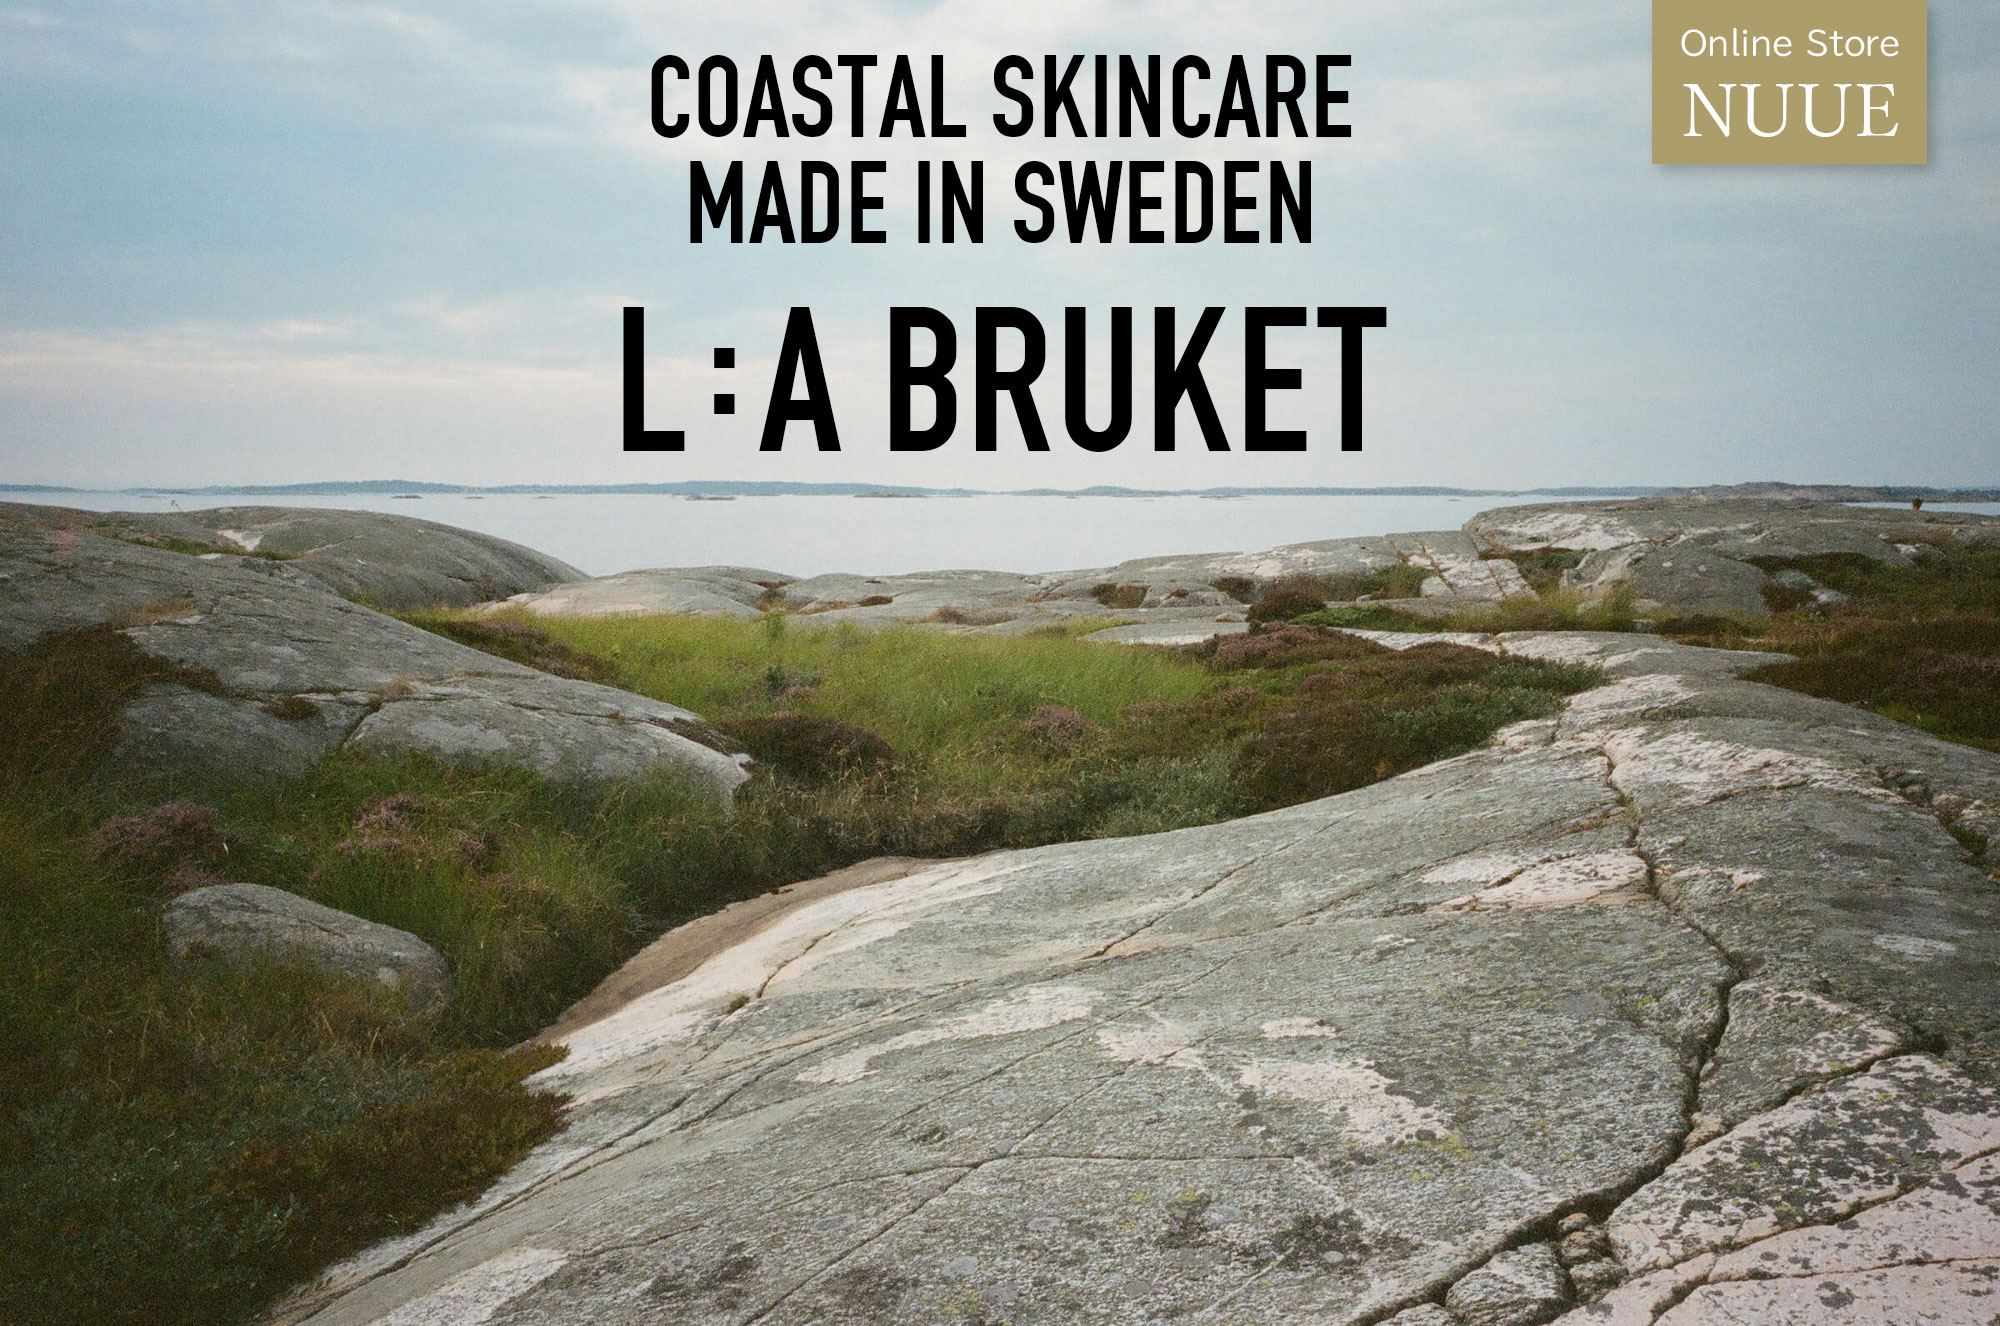 L:A BRUKET, Online Store NUUE, COASTAL SKINCARE MADE IN SWEDEN